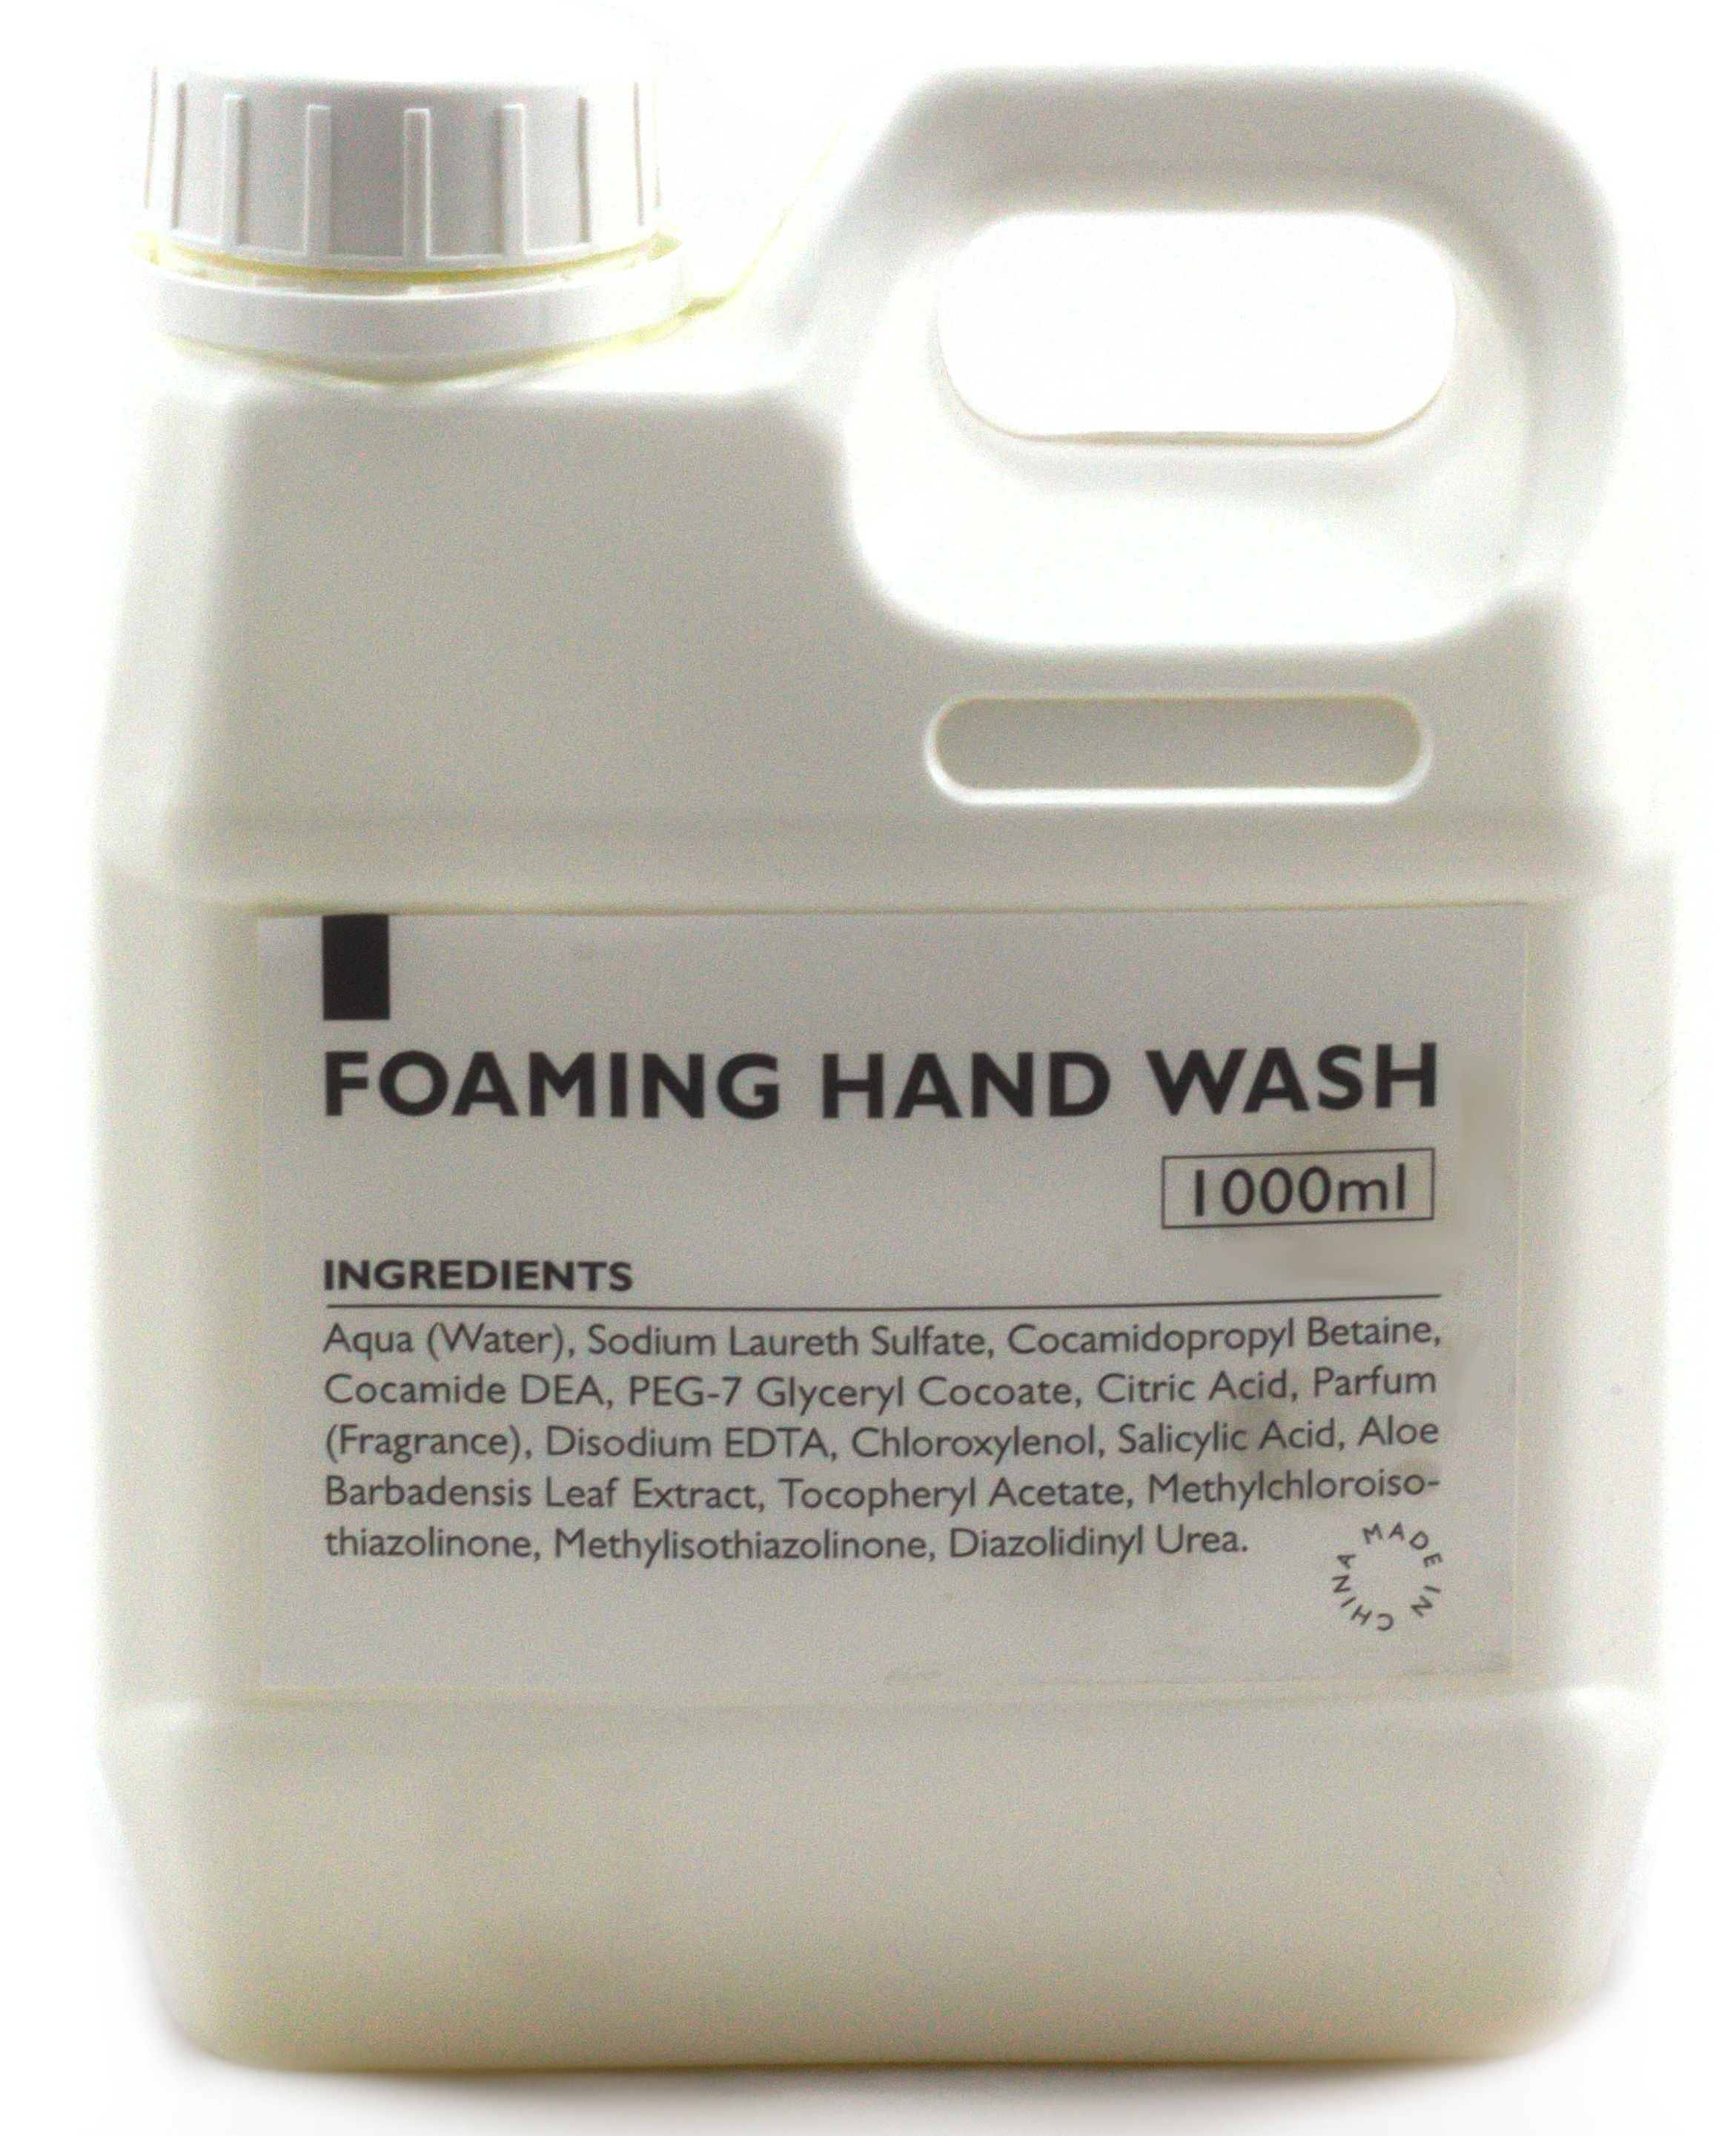 1L Anti-Bacterial Foaming Hand Wash